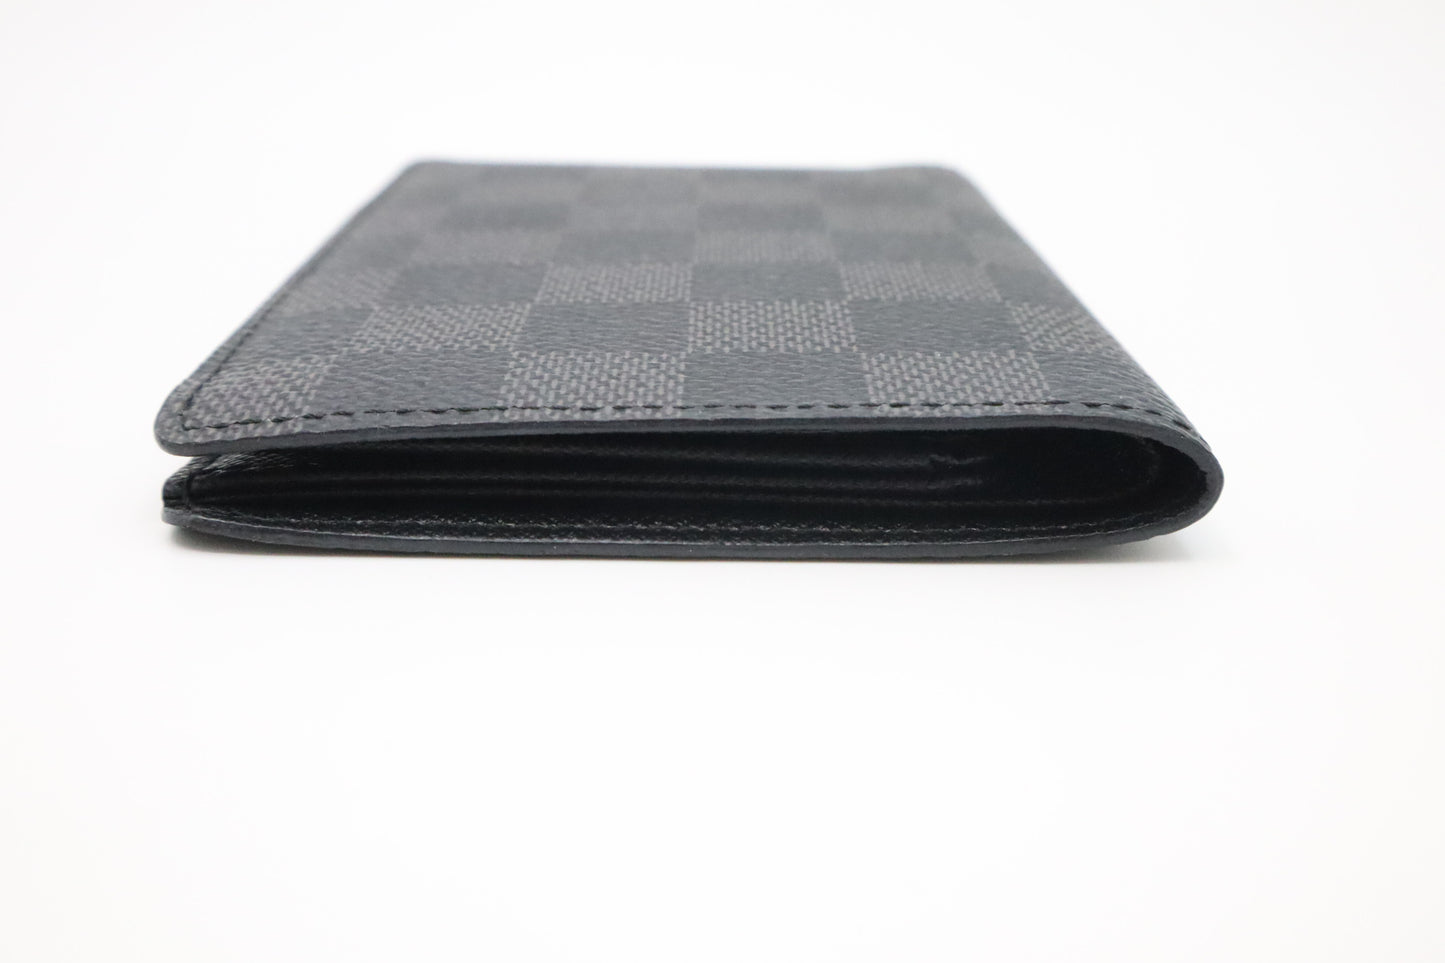 Louis Vuitton Bifold Compact Wallet in Damier Graphite Canvas